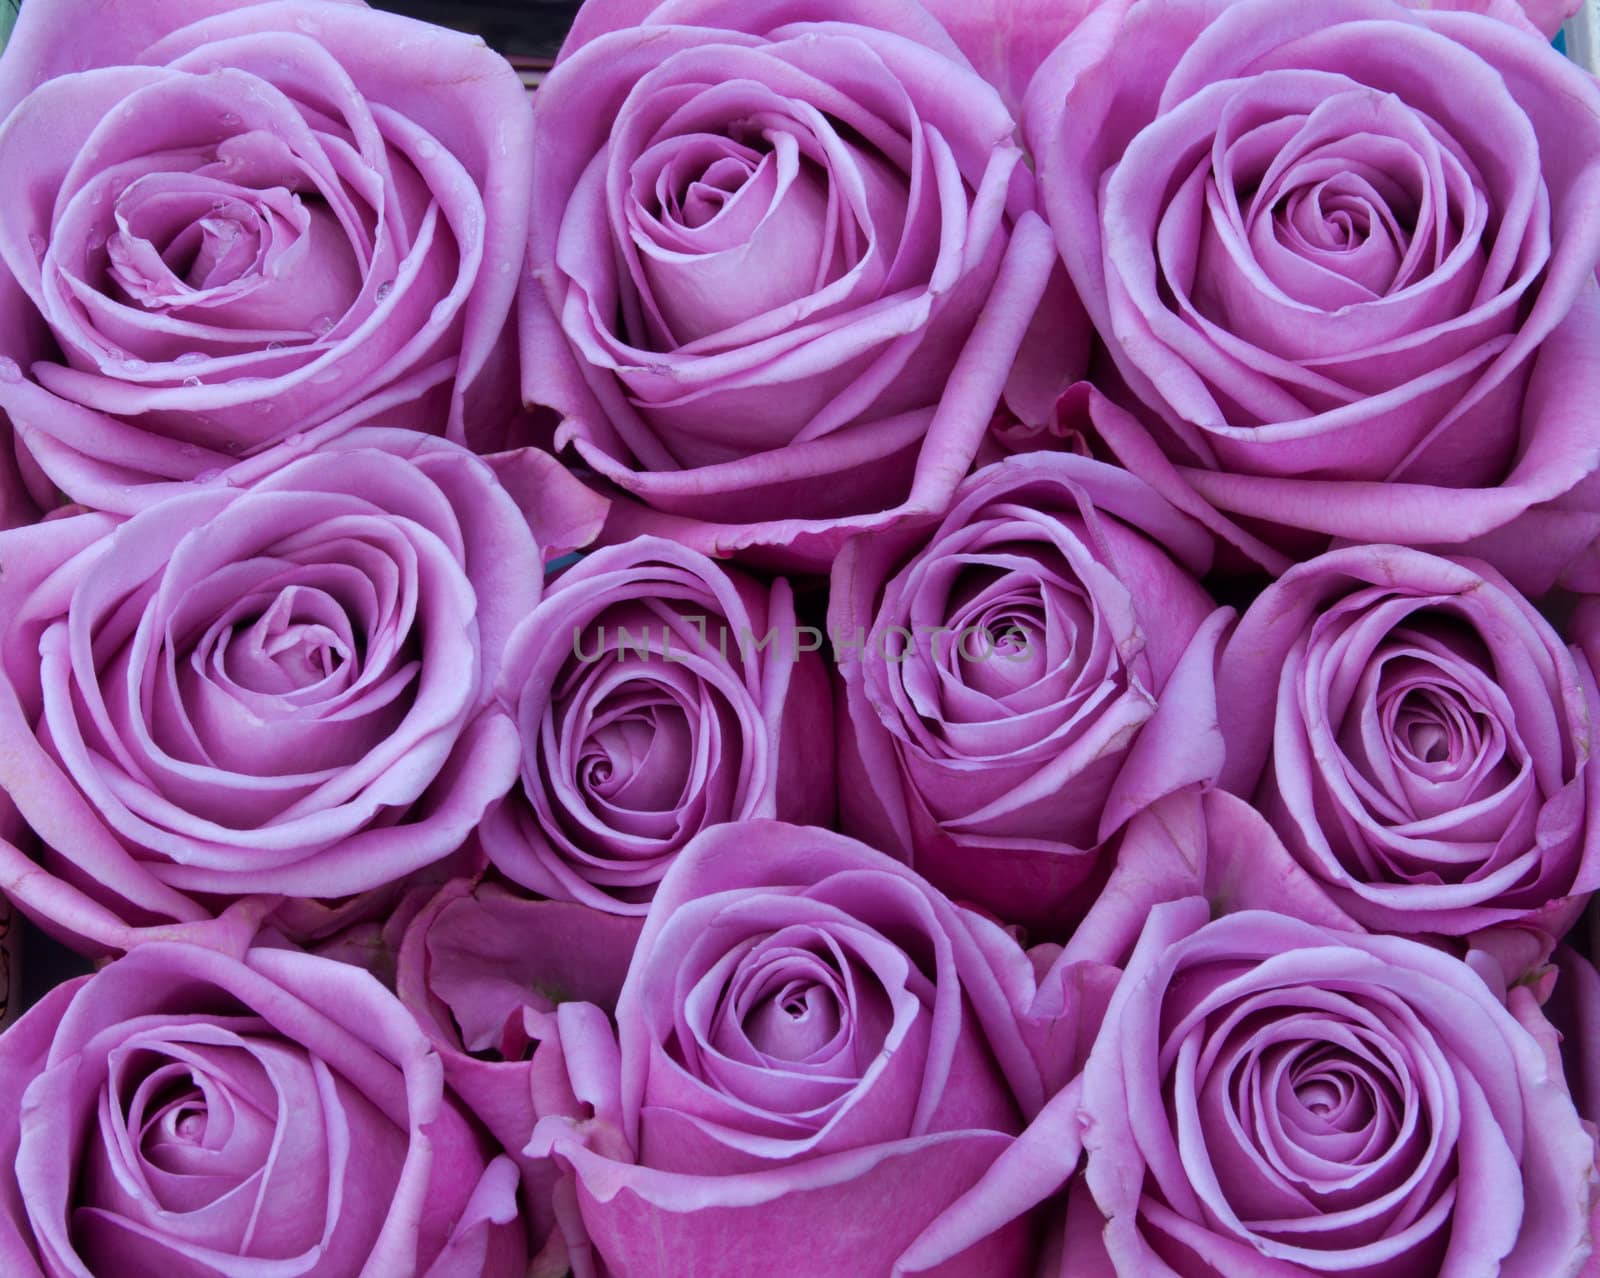 Bunch of purple rose flowers